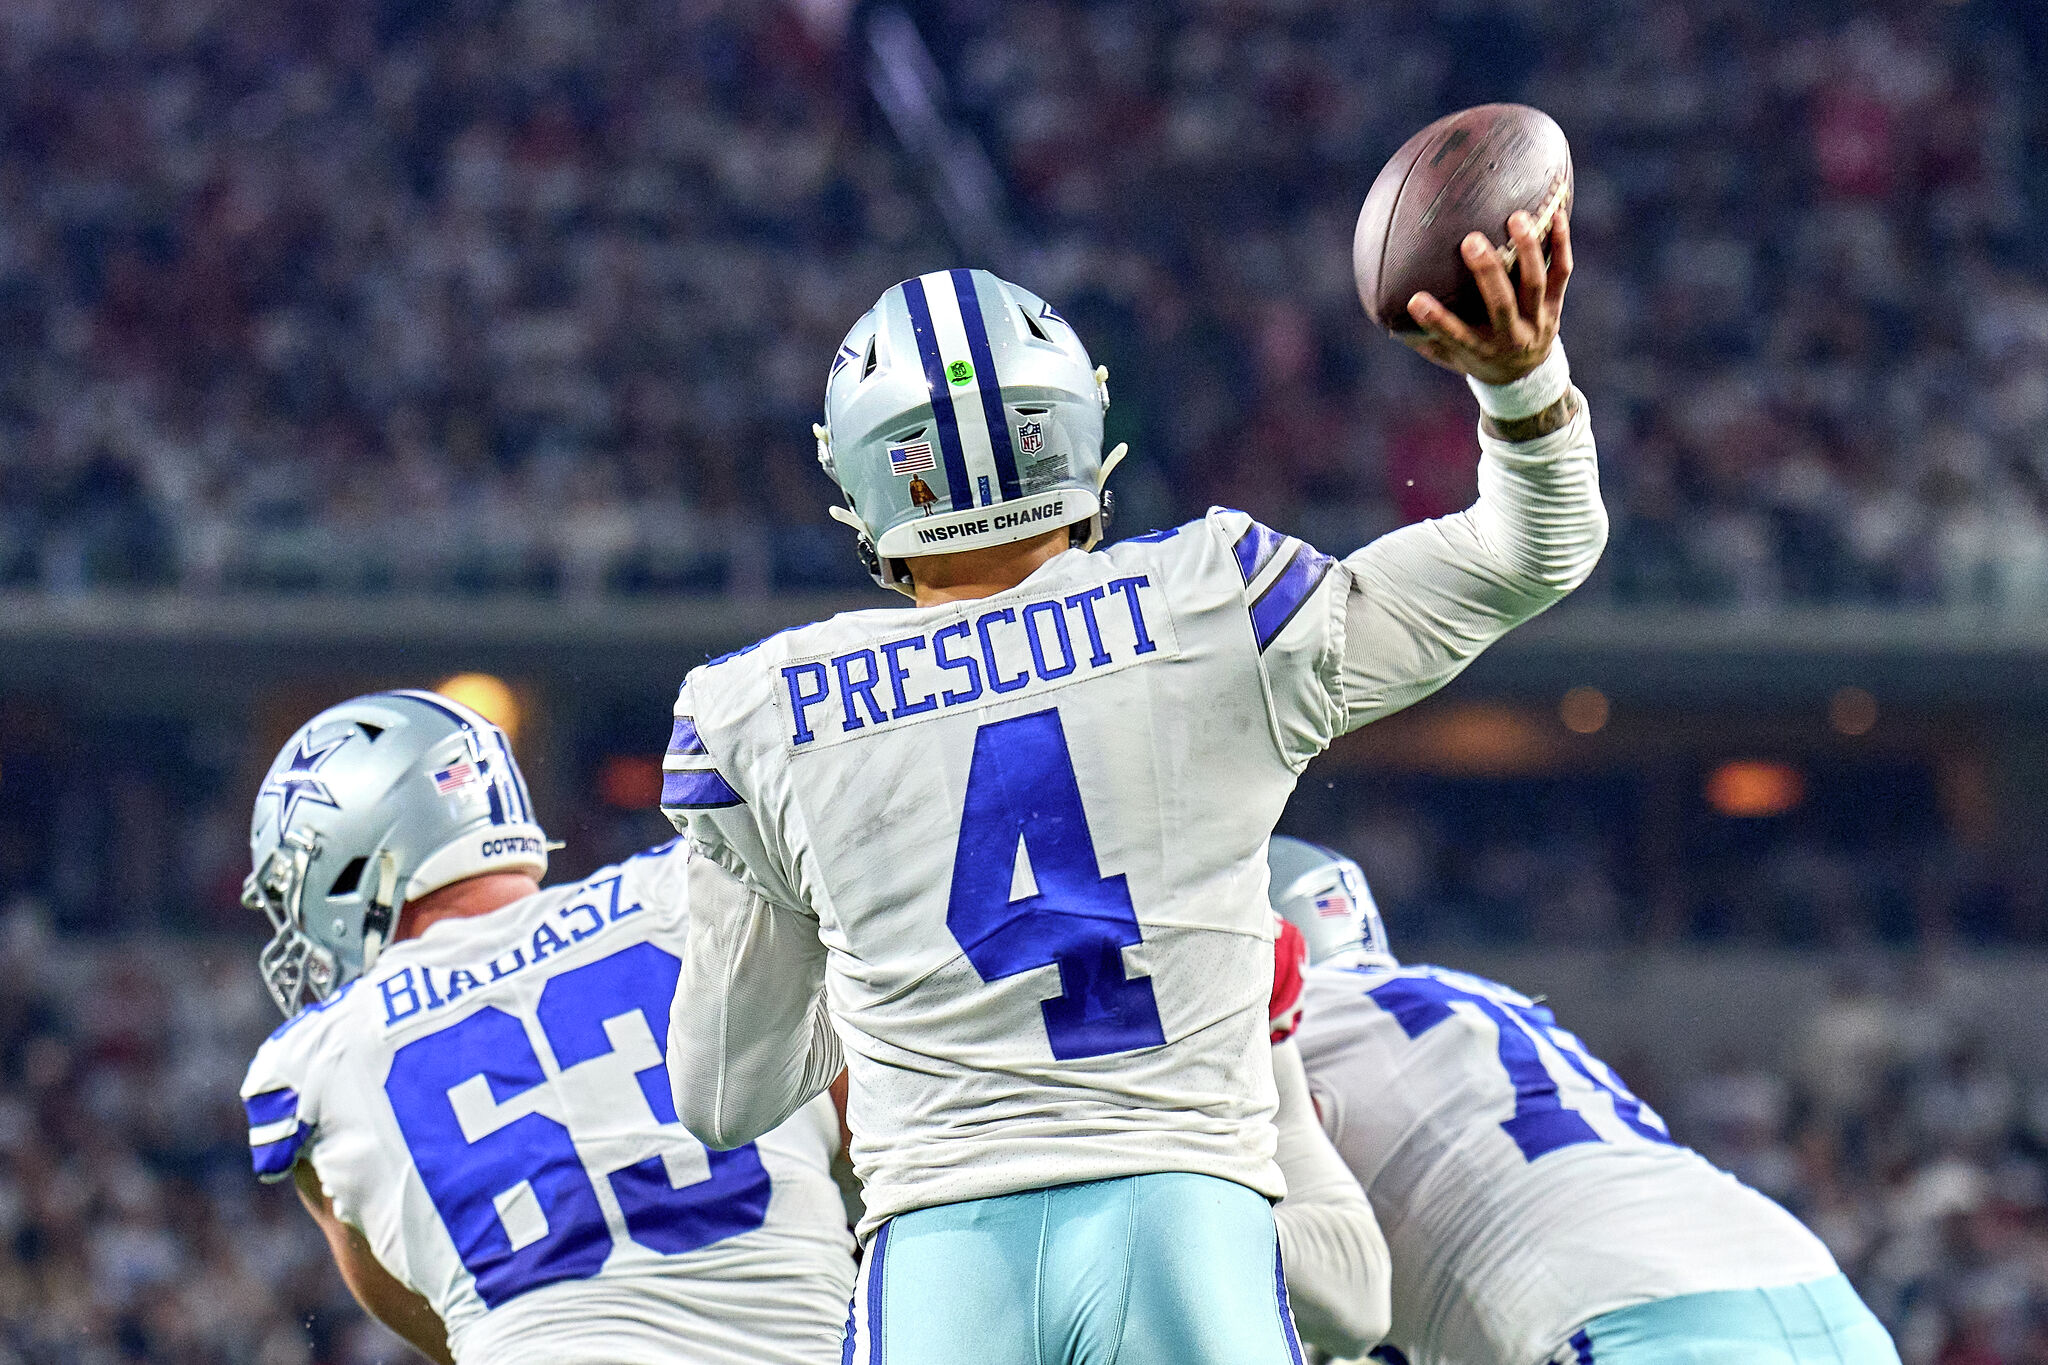 NFL Draft preview: Dallas Cowboys' draft picks, potential